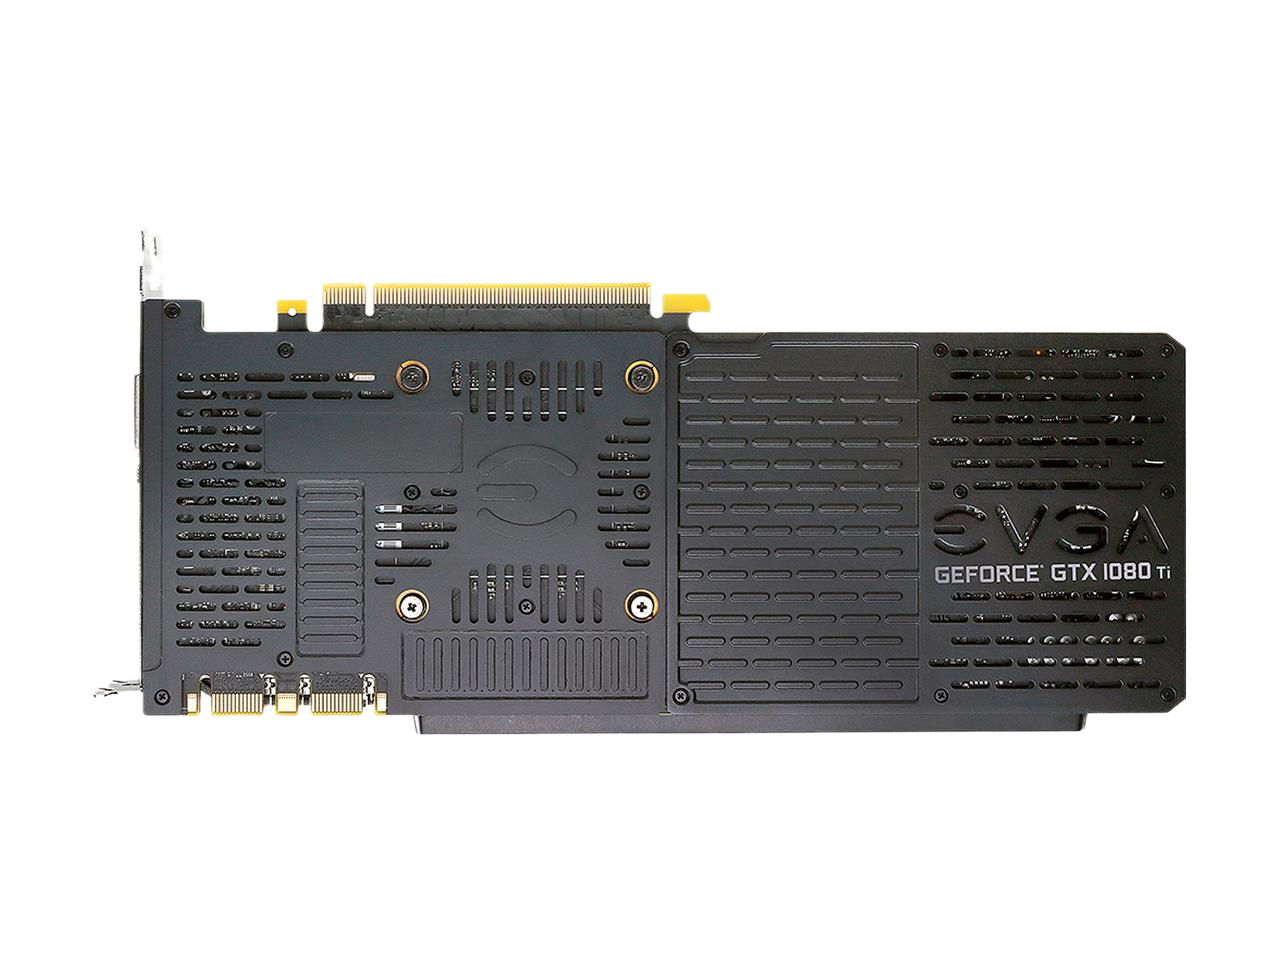 EVGA GeForce GTX 1080 Ti Black Edition GAMING 11GB GDDR5X iCX Cooler & LED  Video Graphics Card 11G-P4-6391-KR